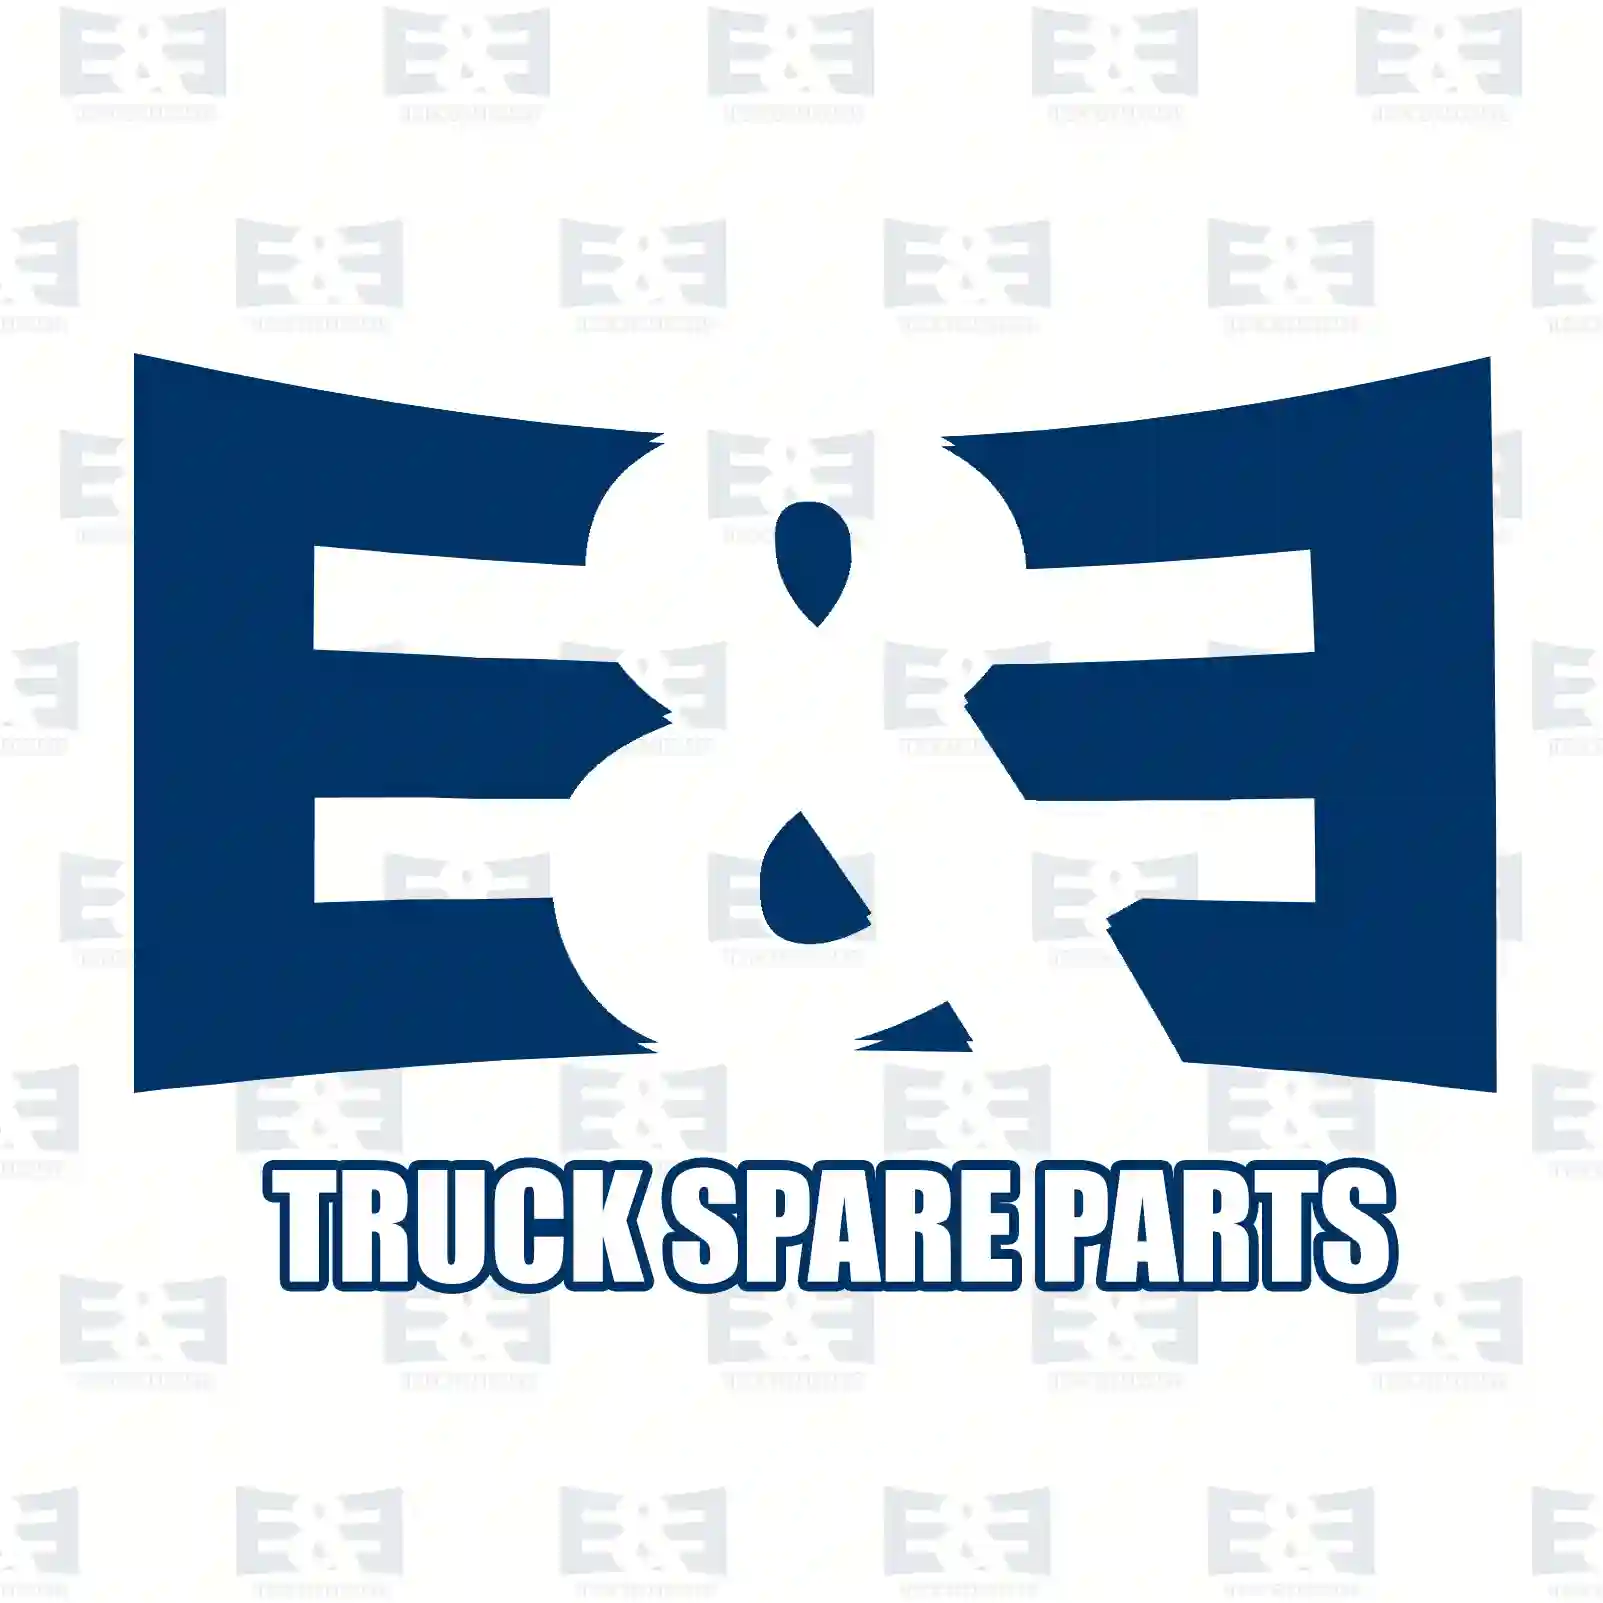  Drum brake lining kit, axle kit - oversize || E&E Truck Spare Parts | Truck Spare Parts, Auotomotive Spare Parts